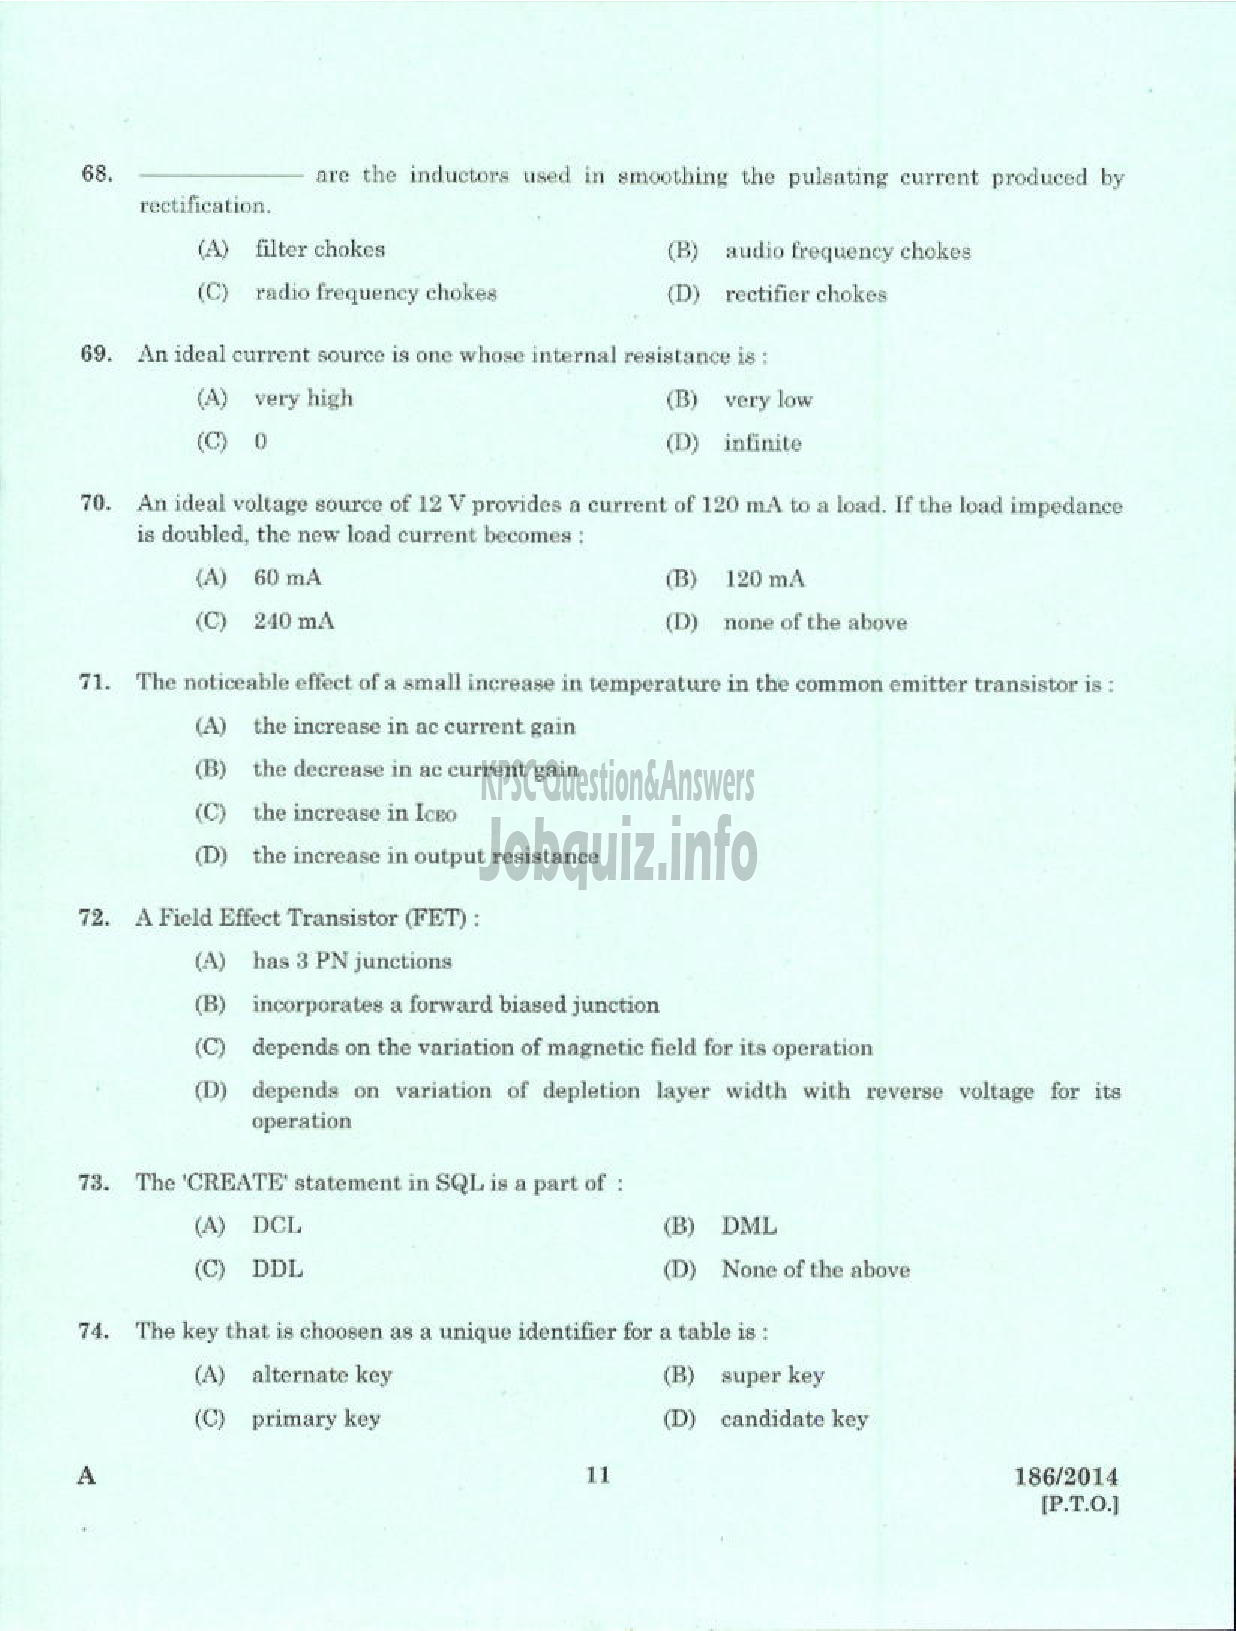 Kerala PSC Question Paper - TRADESMAN INFORMATION TECHNOLOGY TECHNICAL EDUCATION PALAKKAD-9